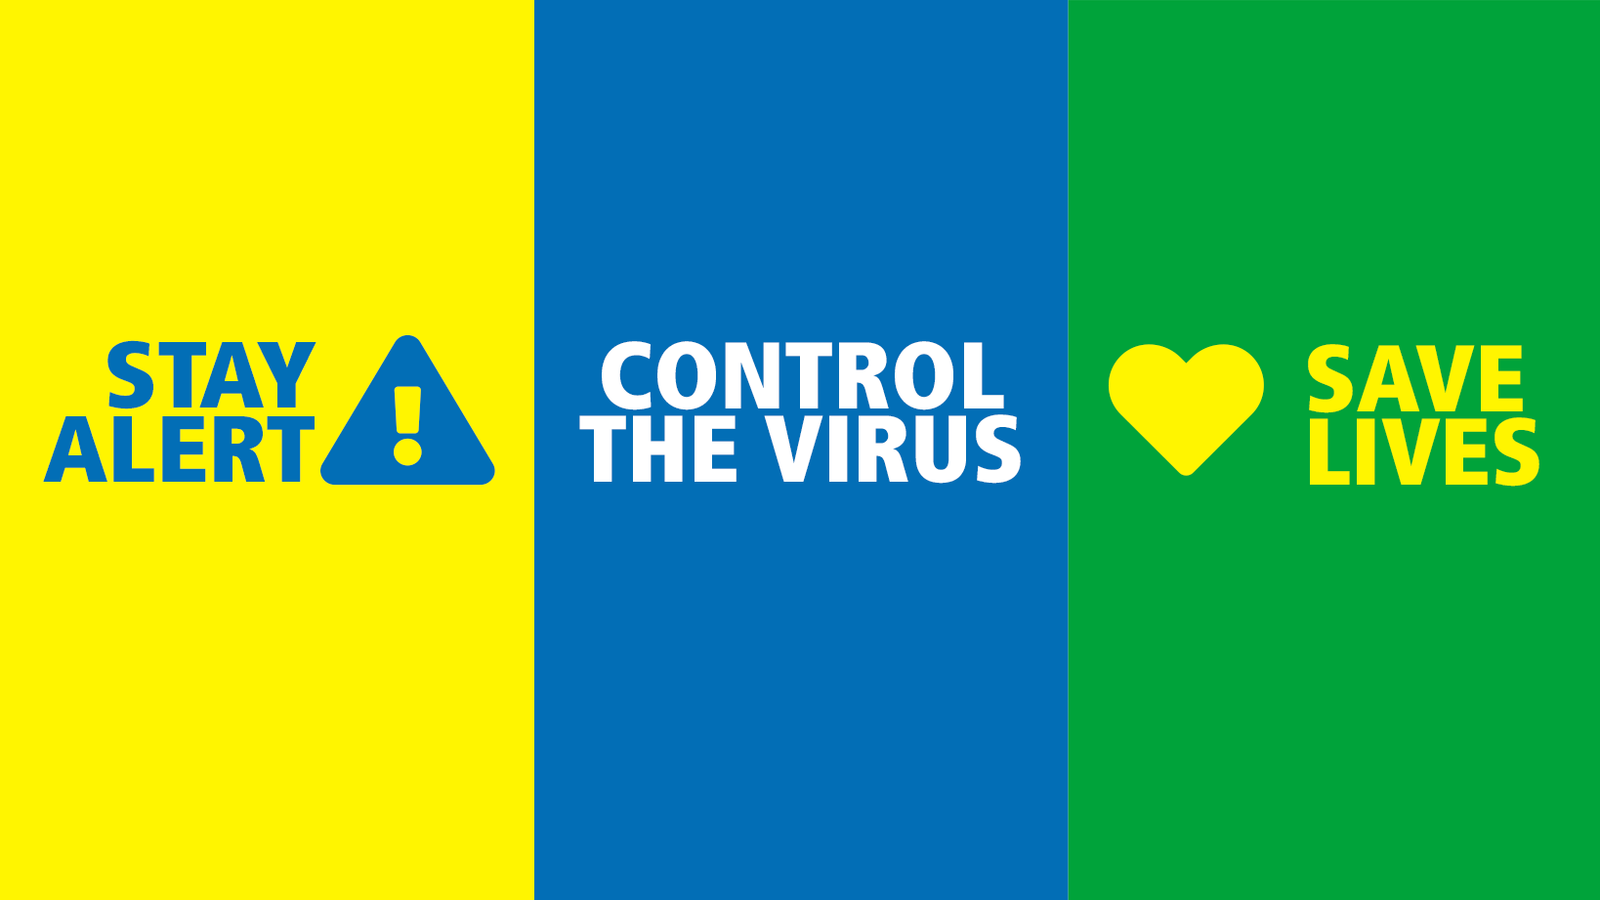 Coronavirus: New COVID-19 rules revealed as leaders unite ...